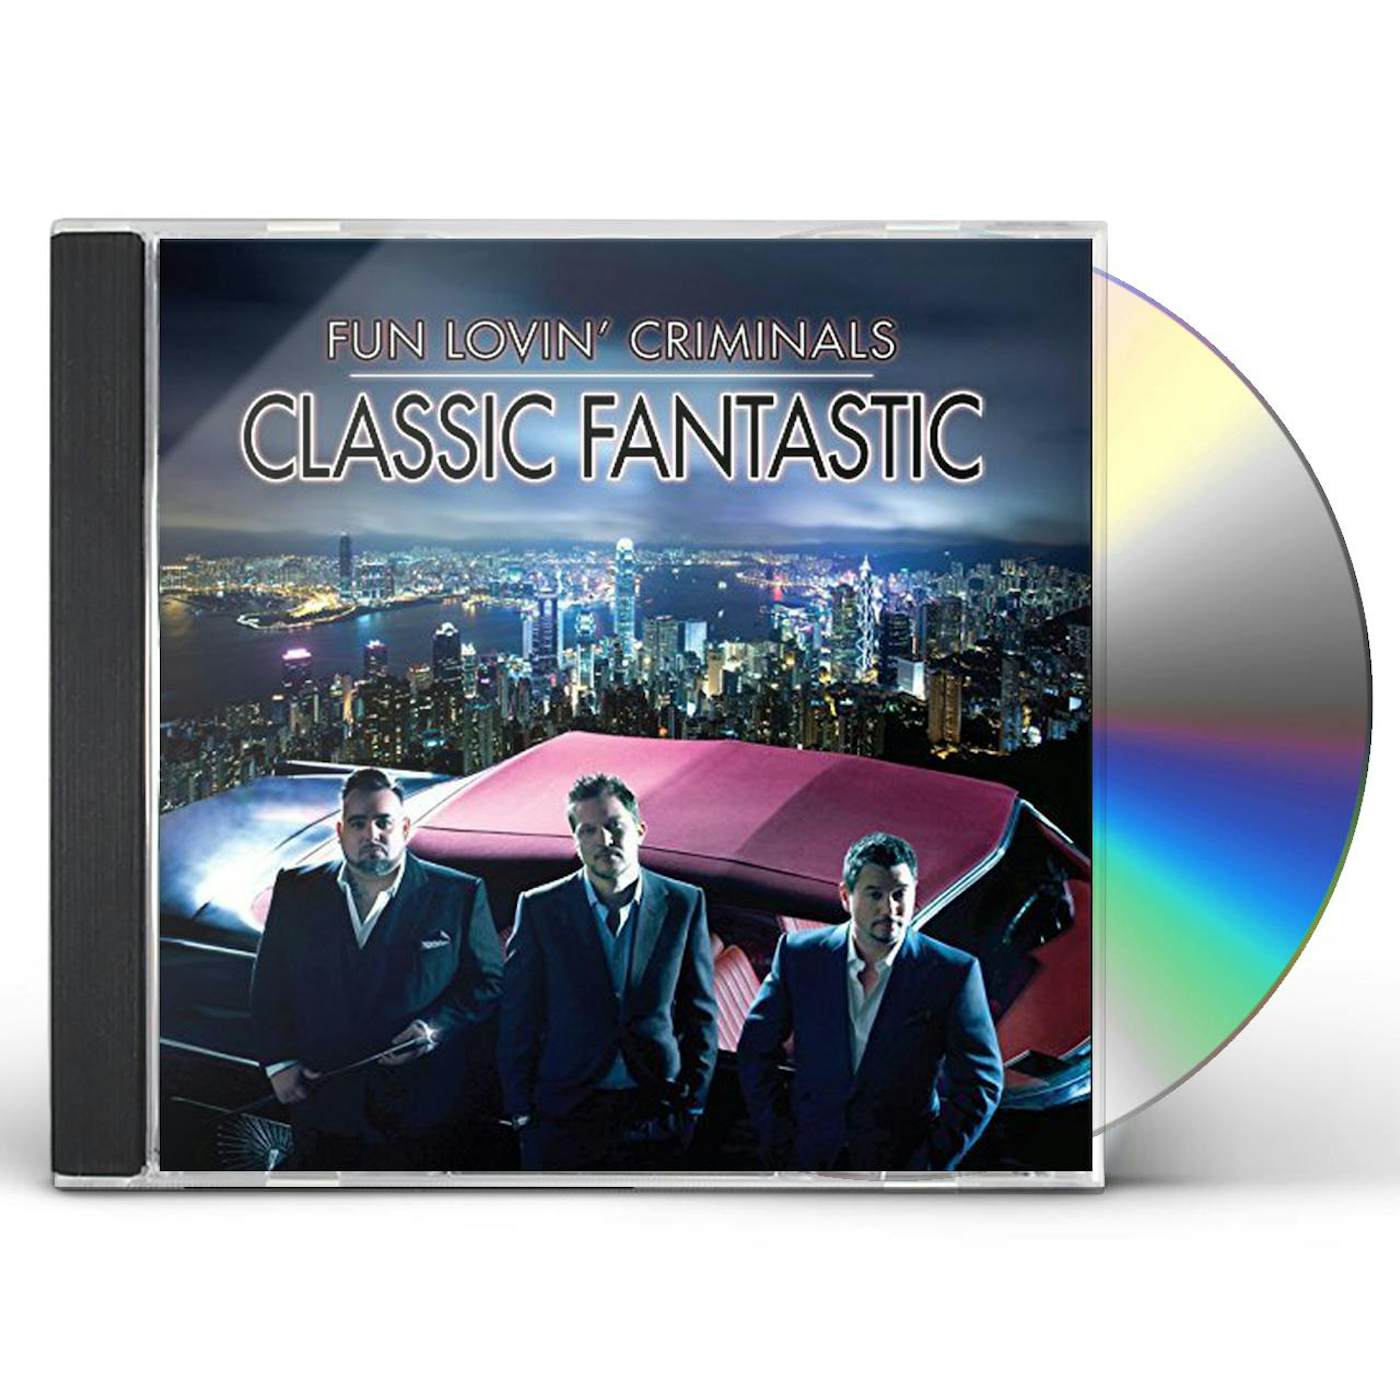 Fun Lovin' Criminals CLASSIC FANTASTIC CD